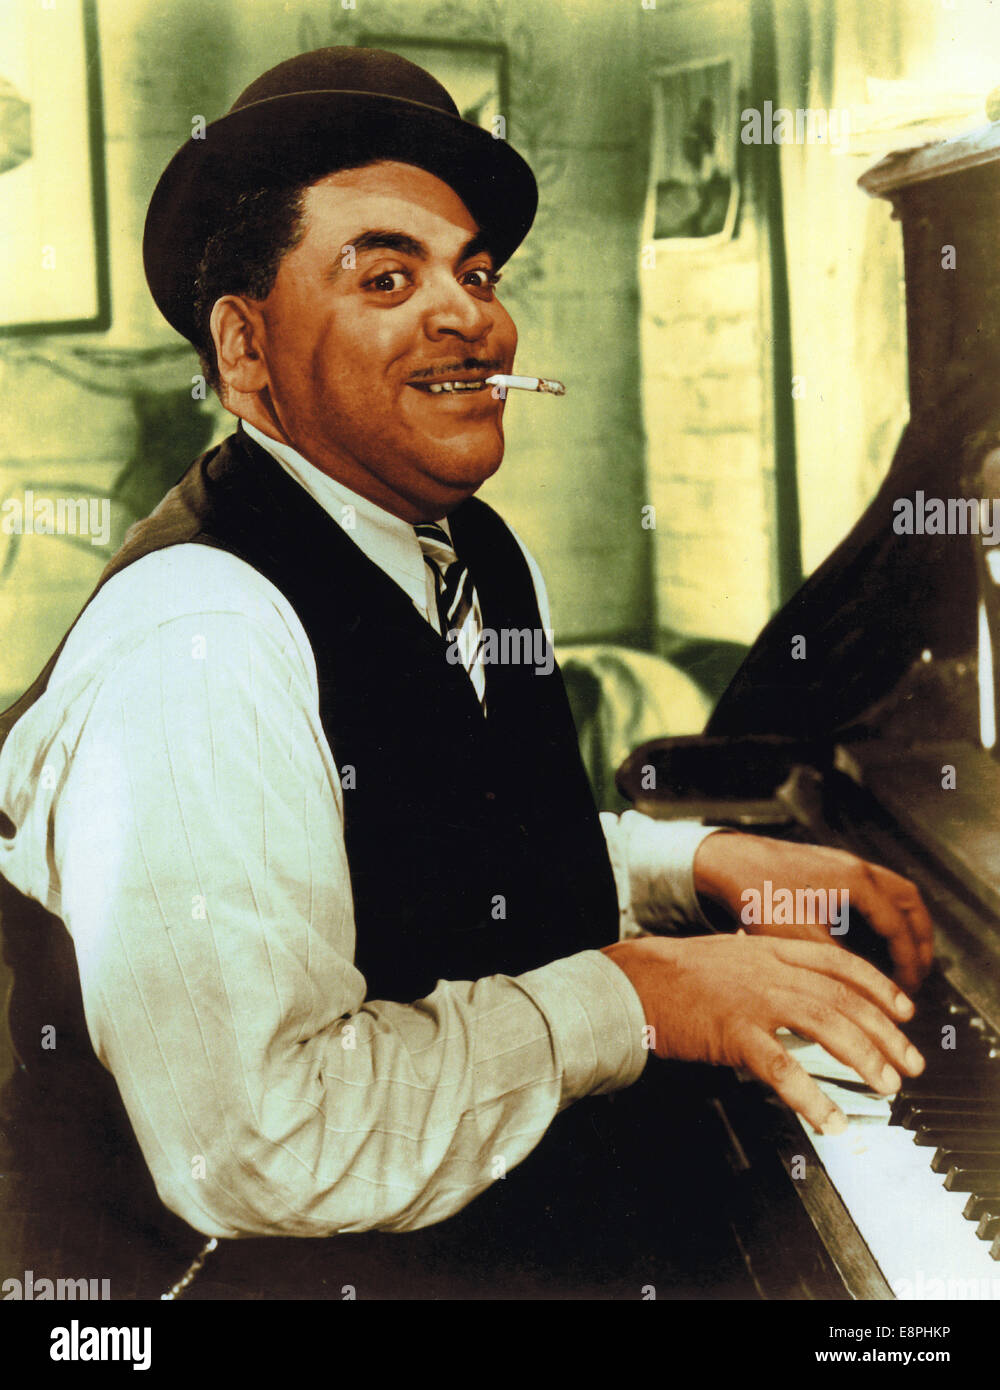 FATS WALLER (1904-1943) US Jazzmusiker in 1943 Film Stormy Weather. Foto: Farben Stockfoto